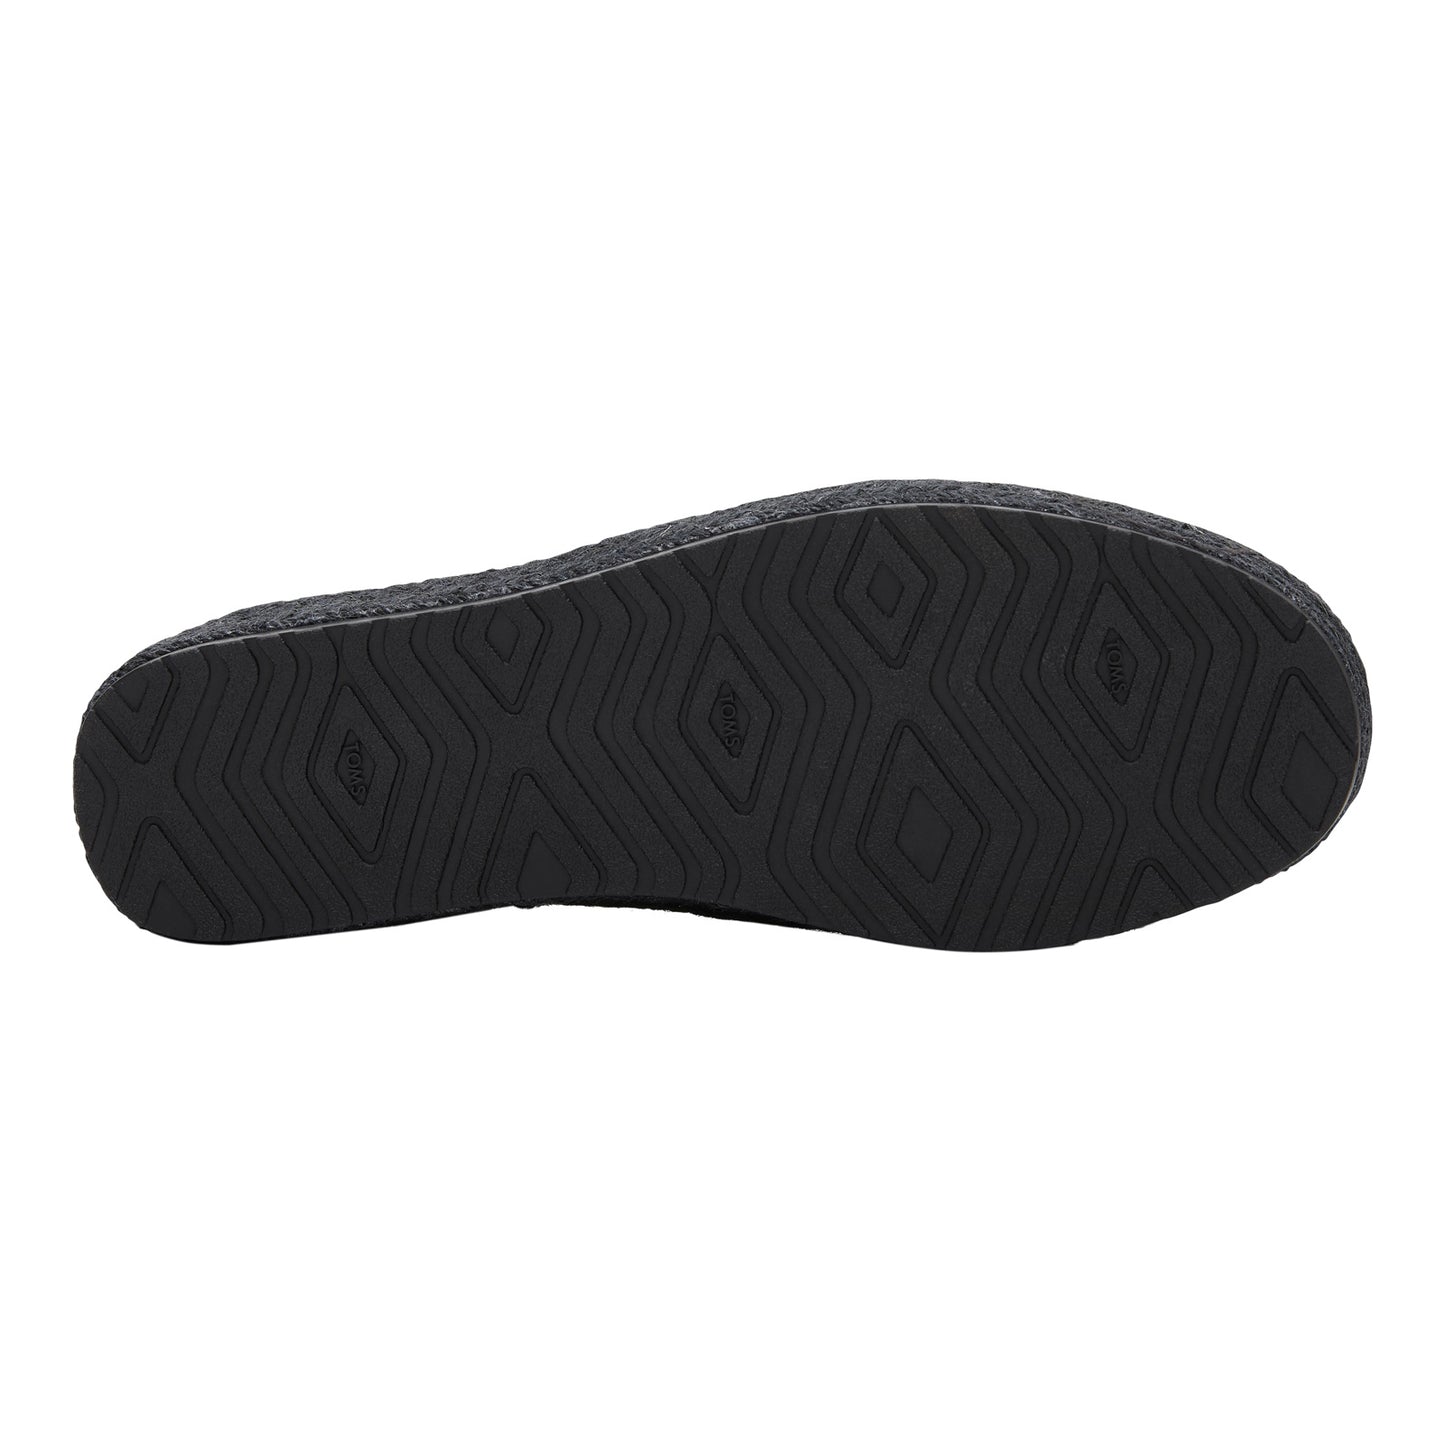 Peltz Shoes  Women's Toms Valencia Slip-On SOLID BLACK 10020198